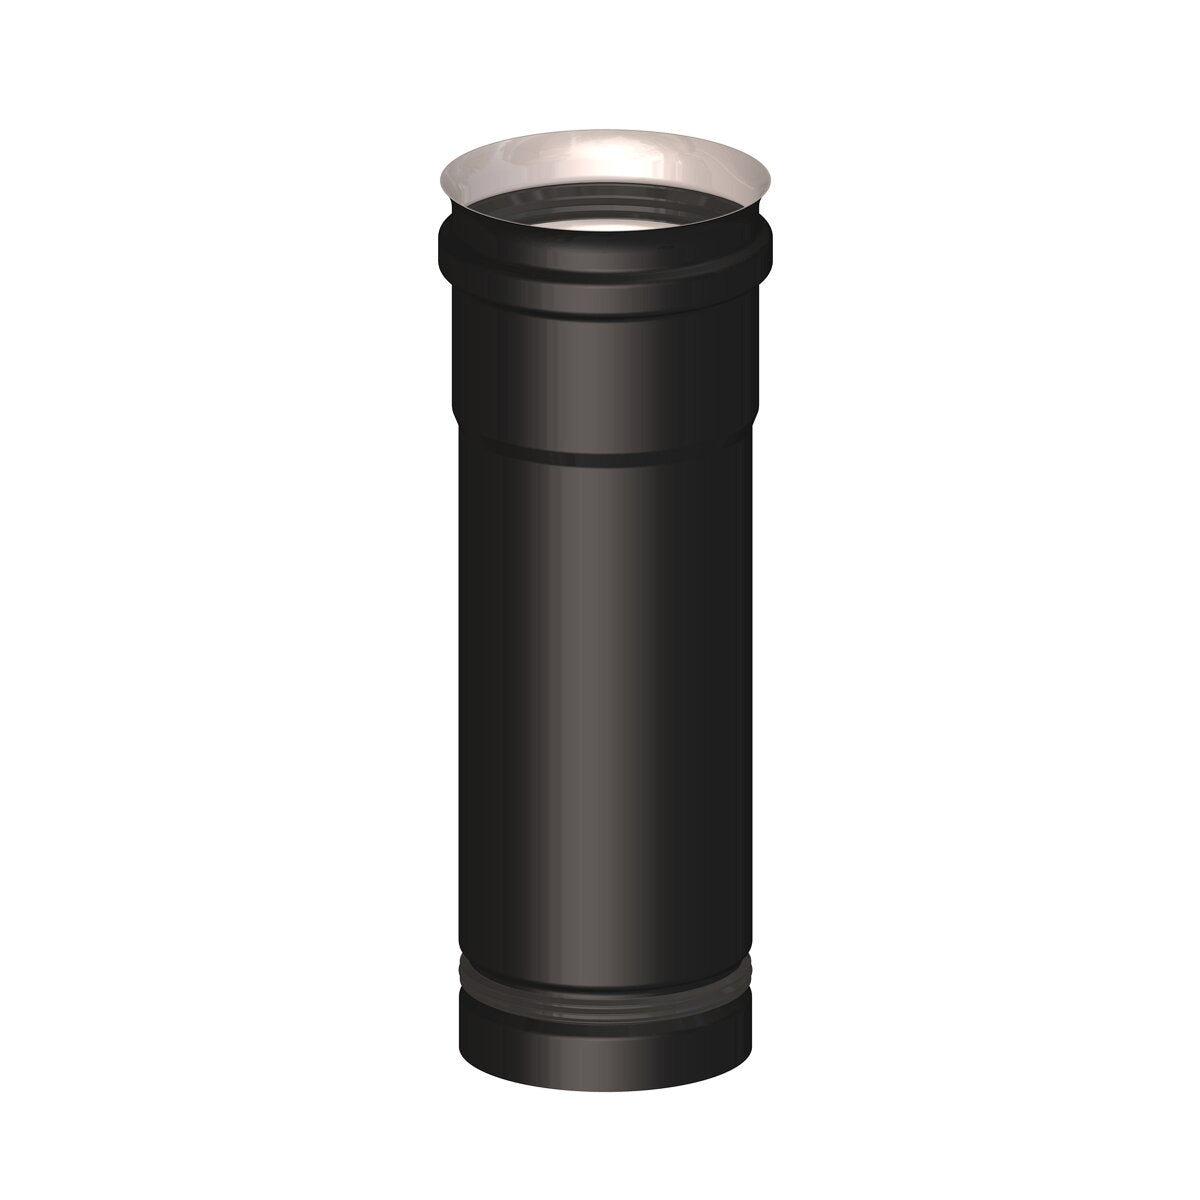 Telescopic element M/F diam. 100 mm for pellet stove and pellet boiler fume exhaust